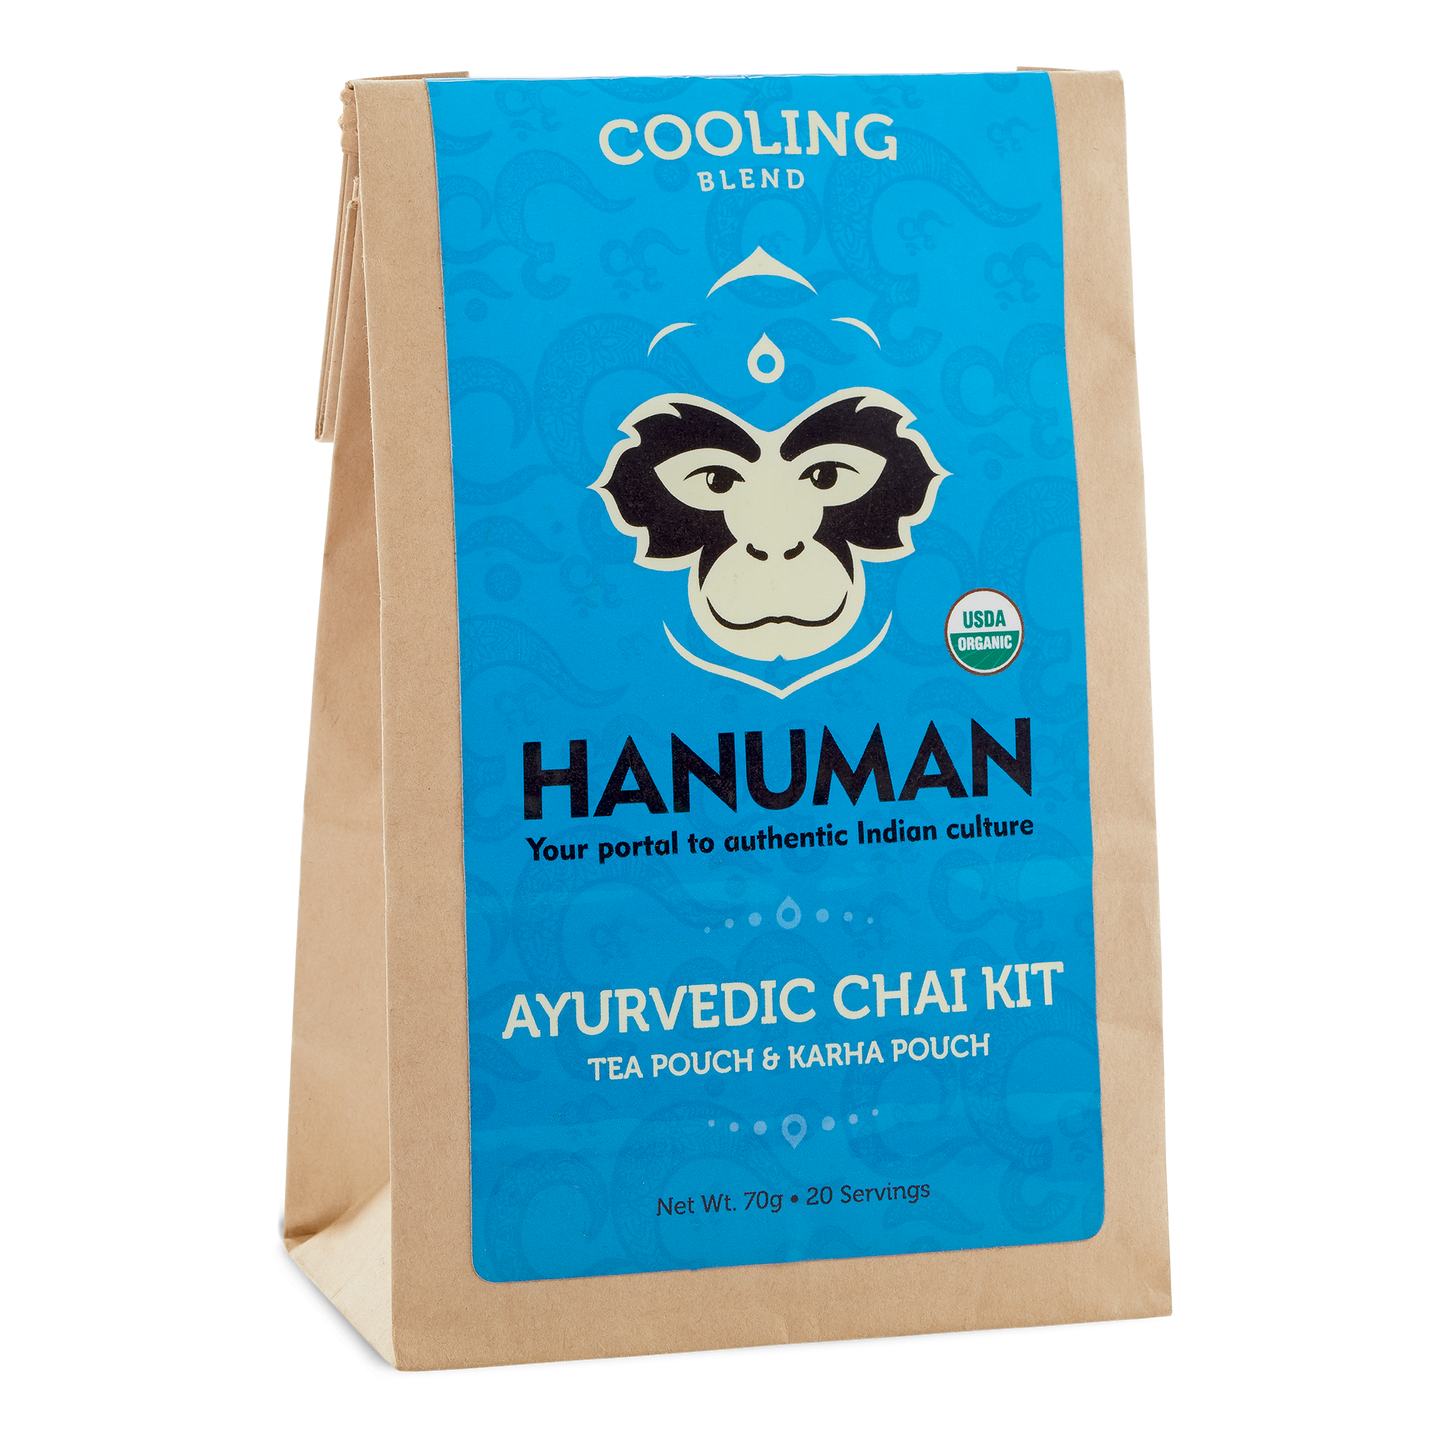 Ayurvedic & Organic Chai Kit: Cooling (Loose Leaf Tea + Spices)